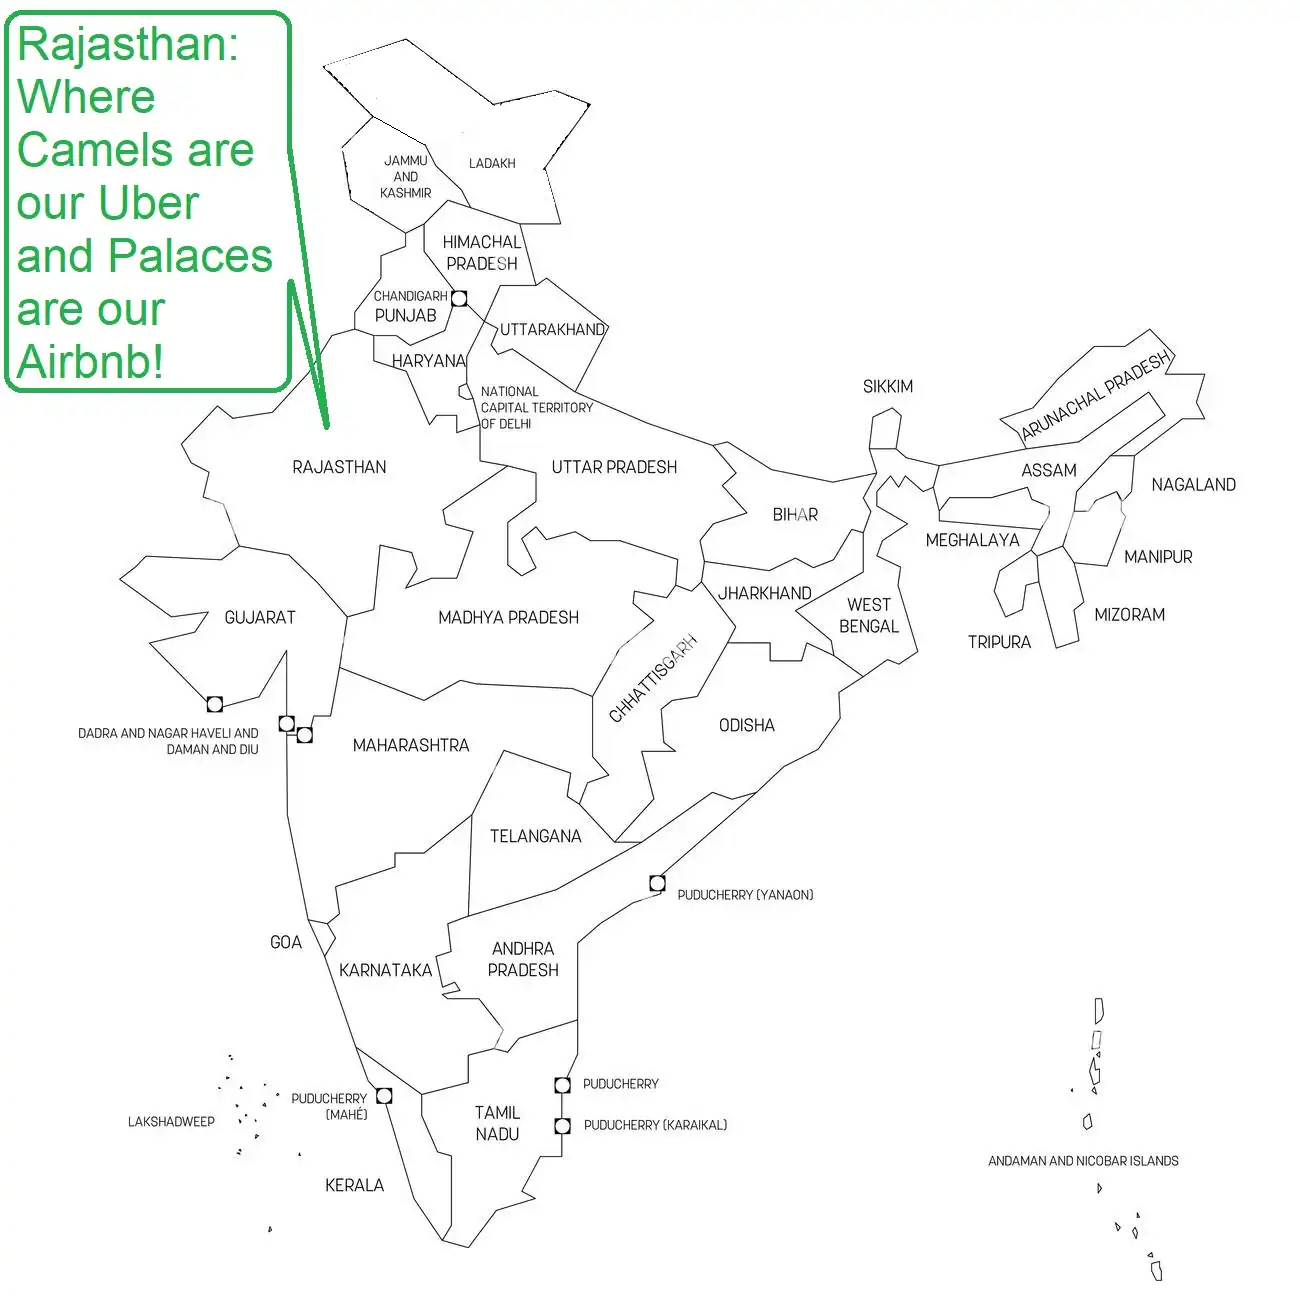 Rajasthan: A Voyage Through the Land of Kings